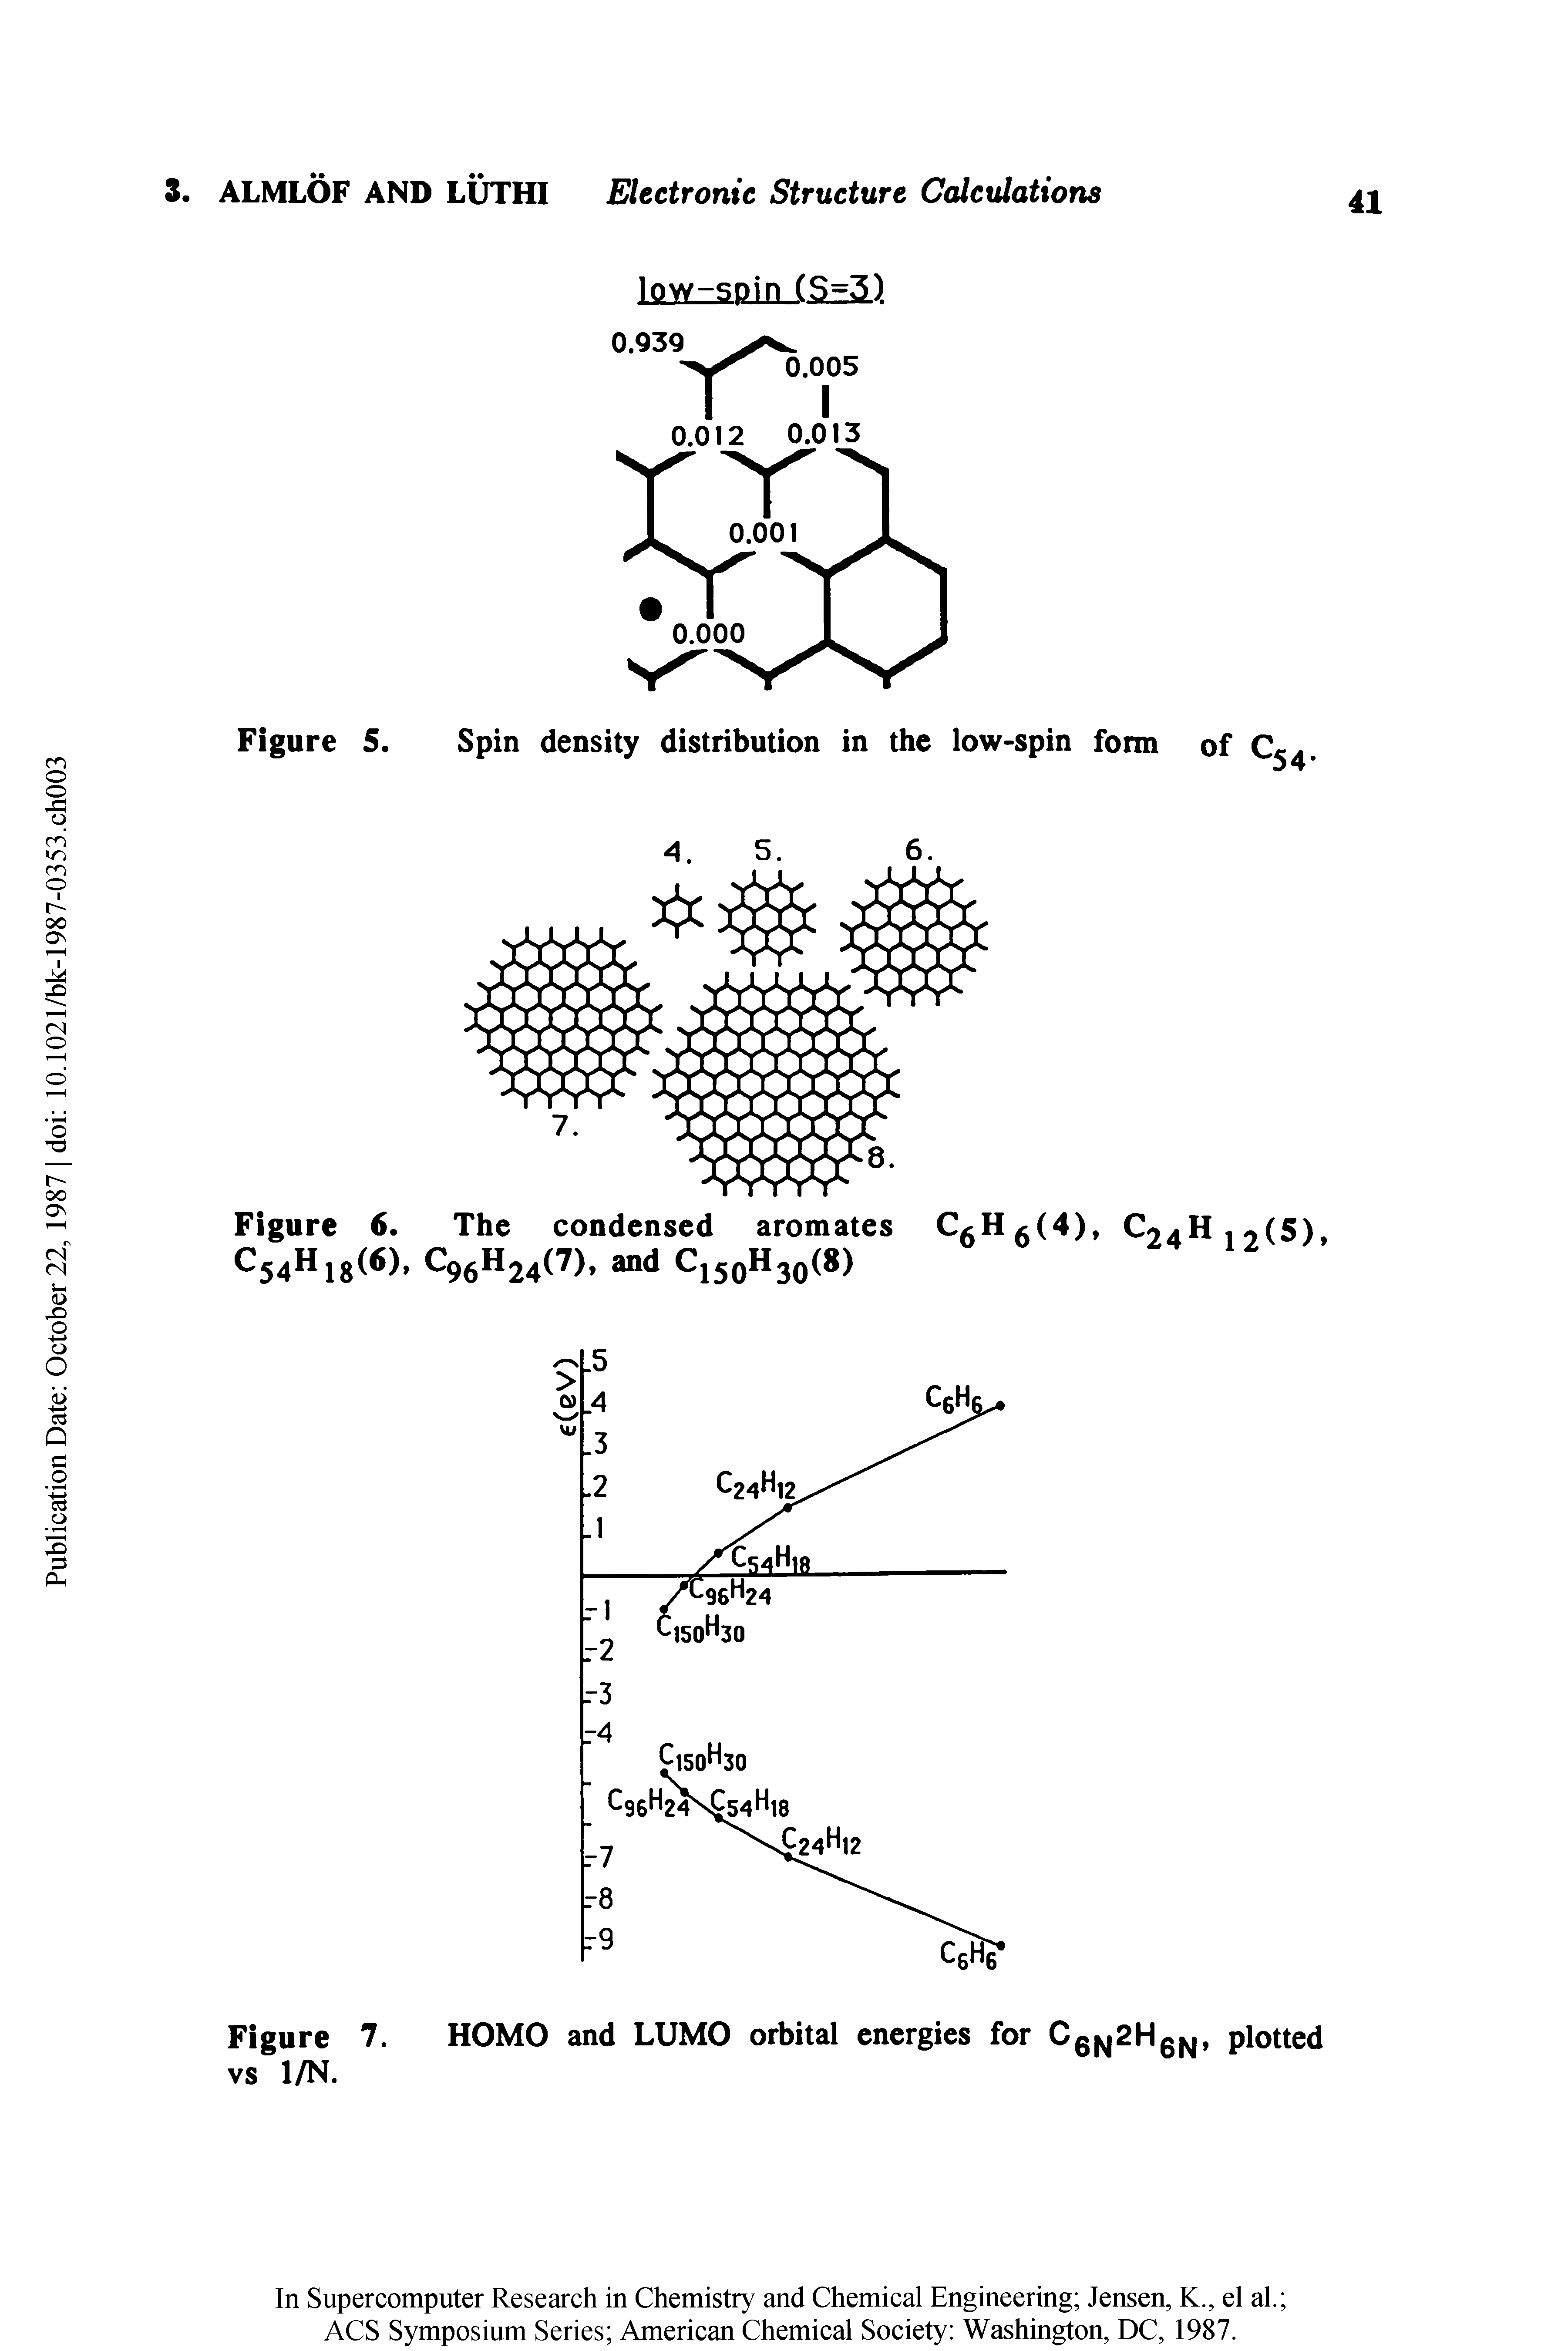 Figure 7. HOMO and LUMO orbital energies for C0 2Hg, plotted vs 1/N.